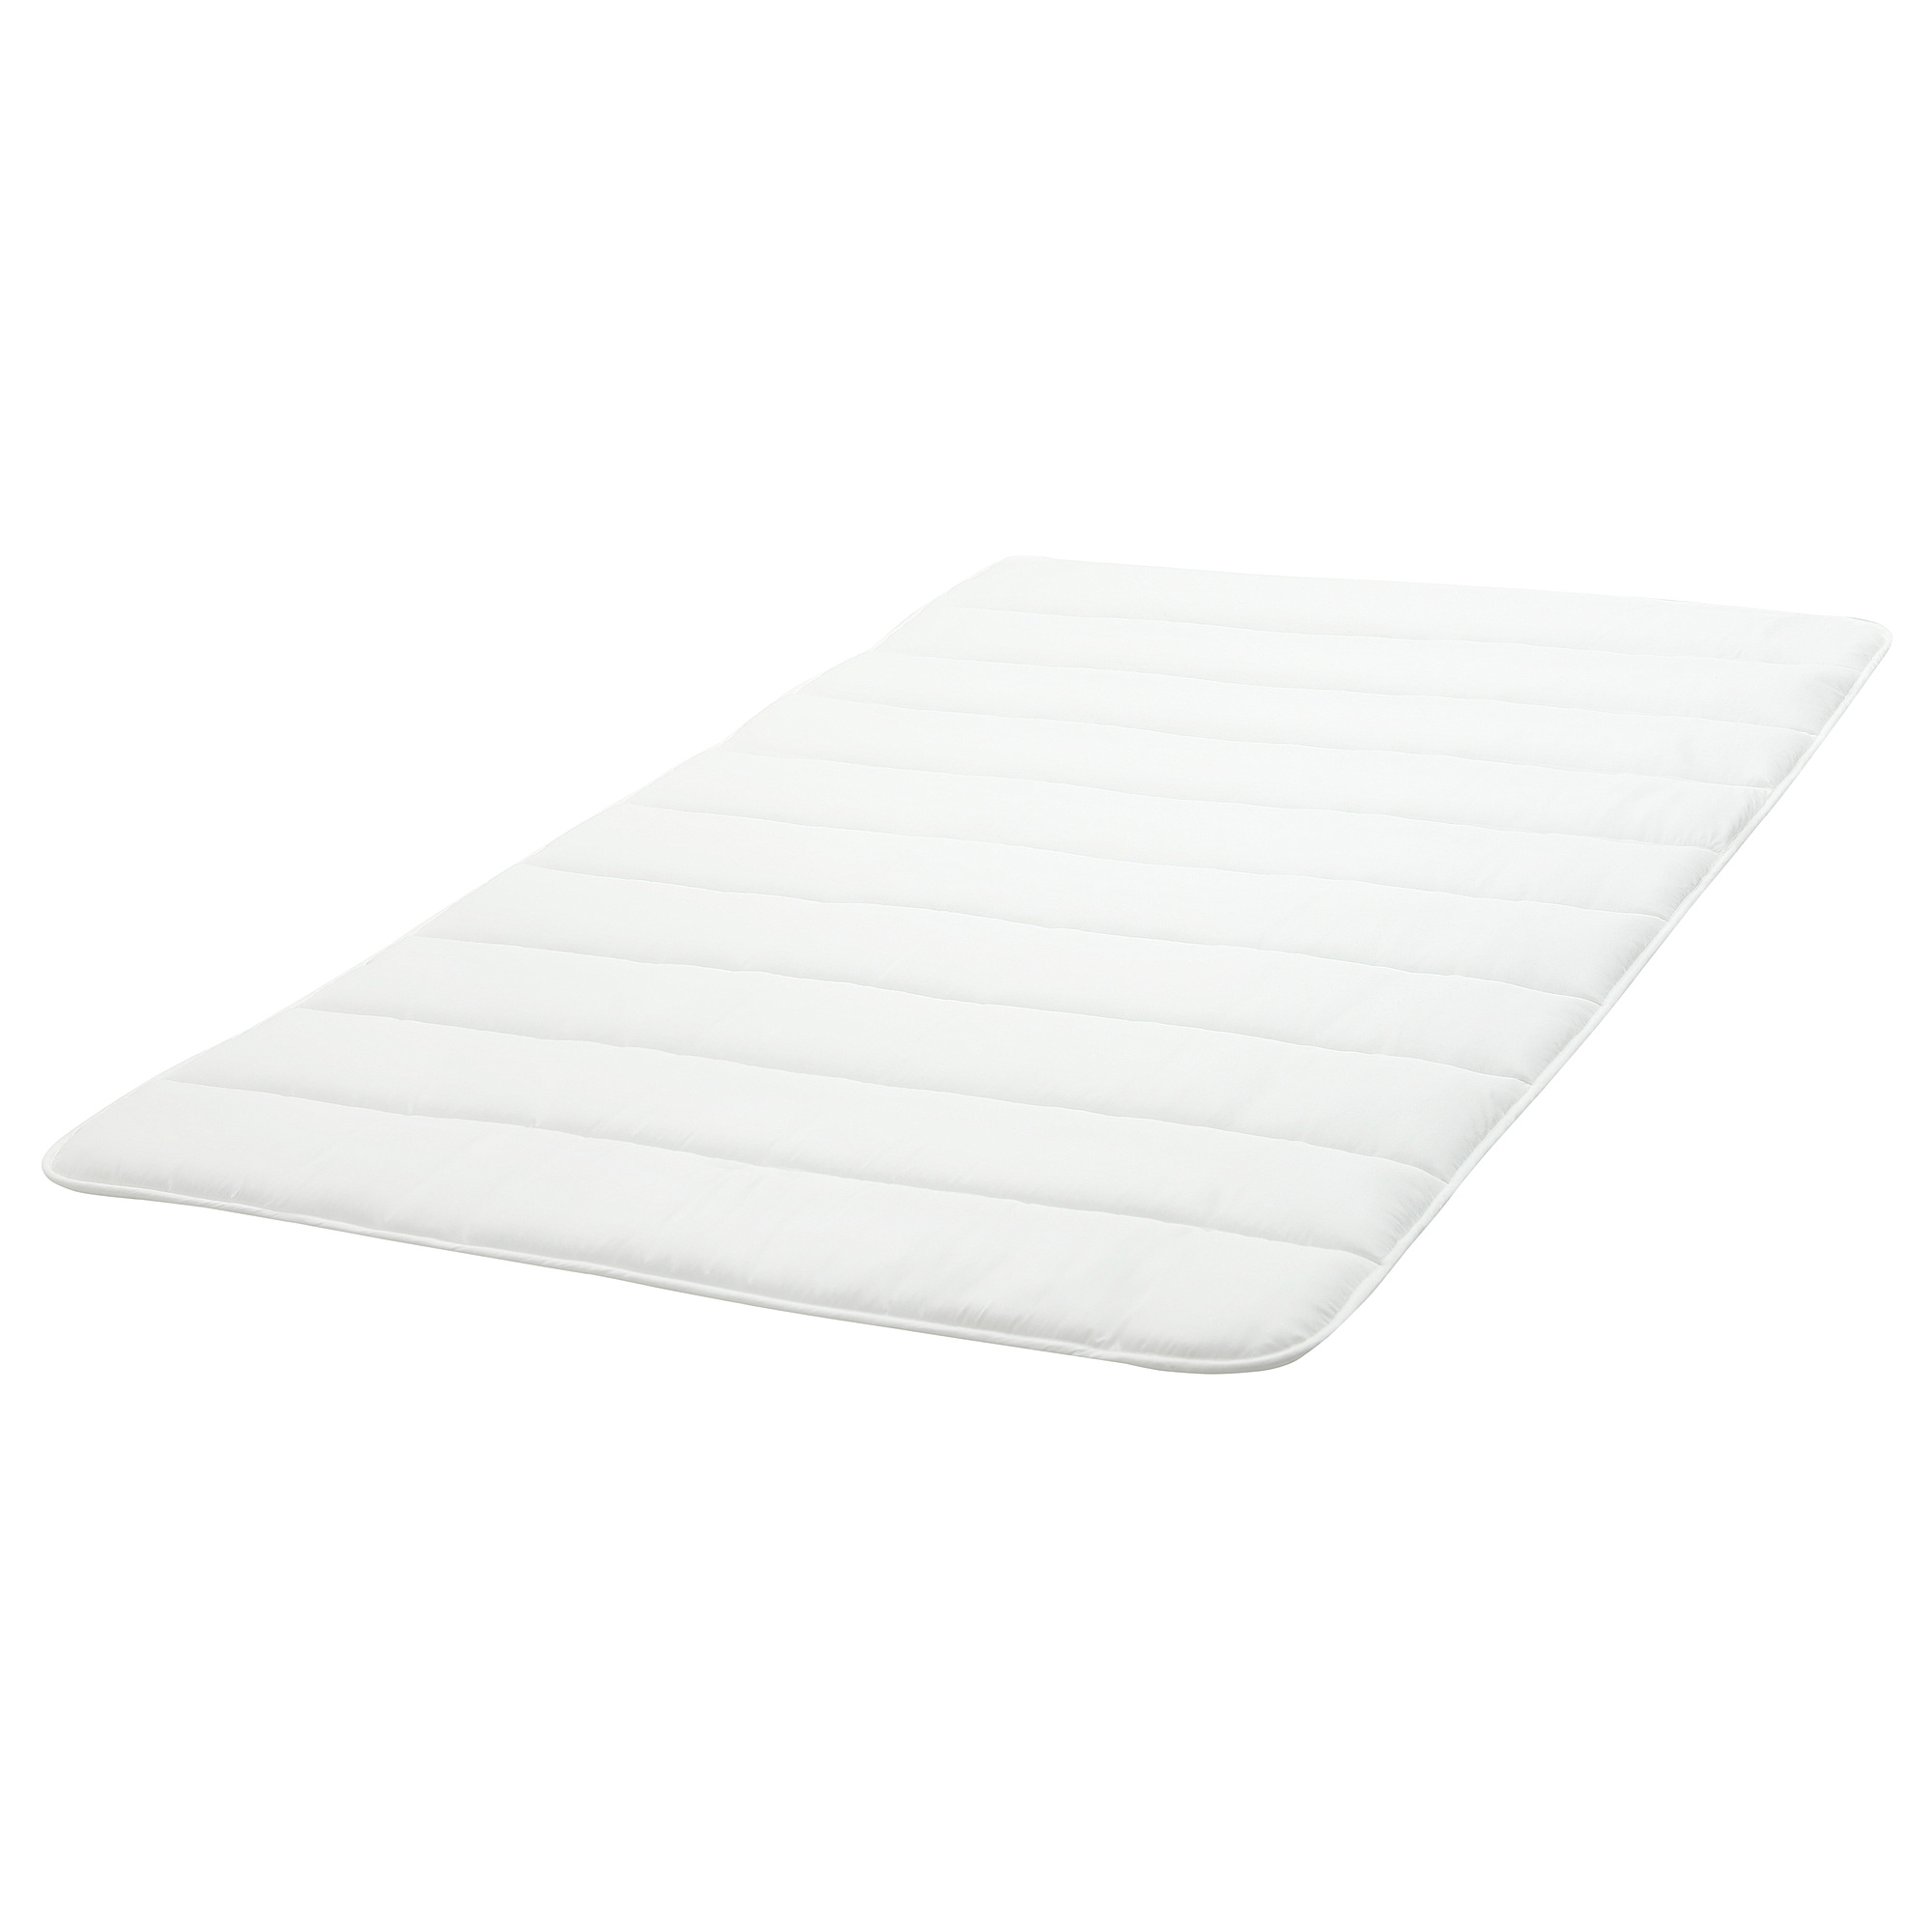 BRUKSVARA mattress pad